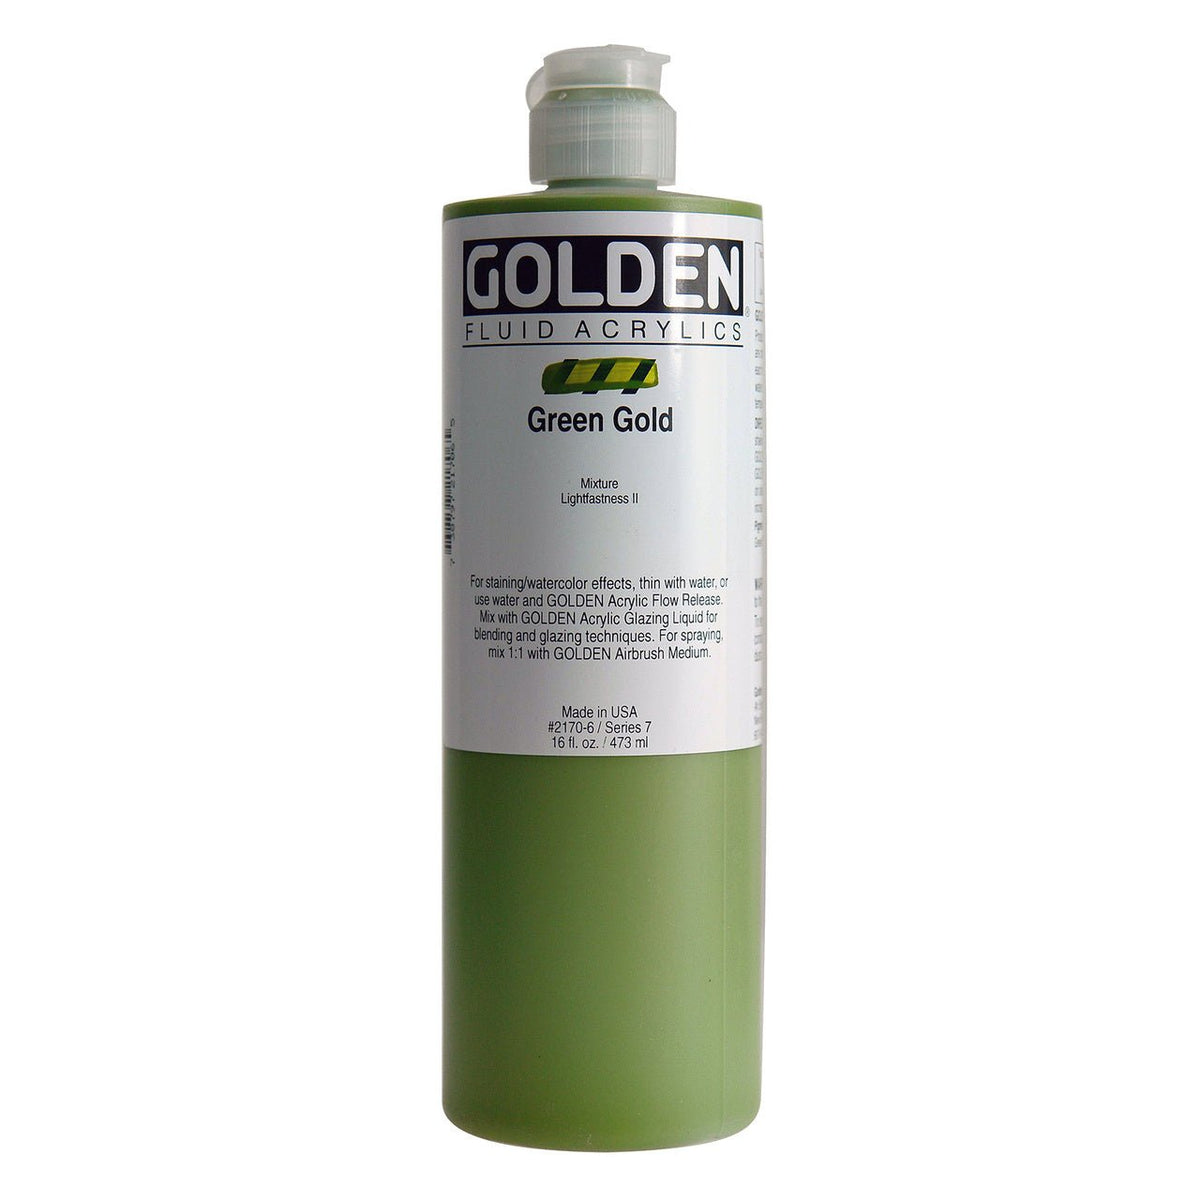 Golden Fluid Acrylic Green Gold 16 oz - merriartist.com